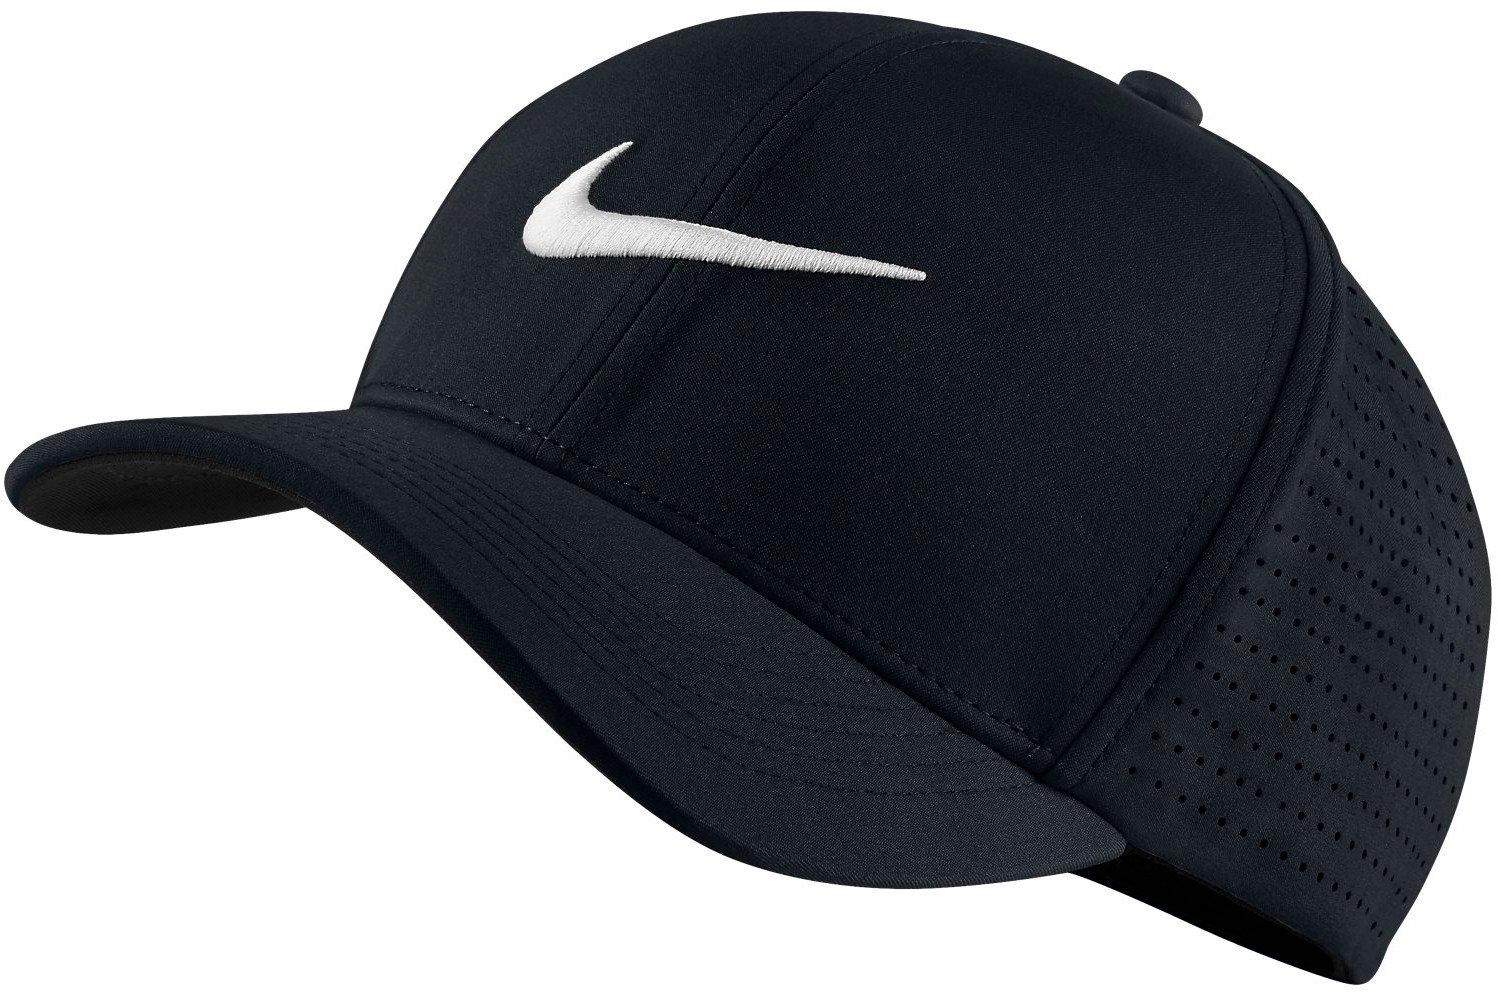 Šiltovka Nike GOLF CLASSIC99 PERF CAP